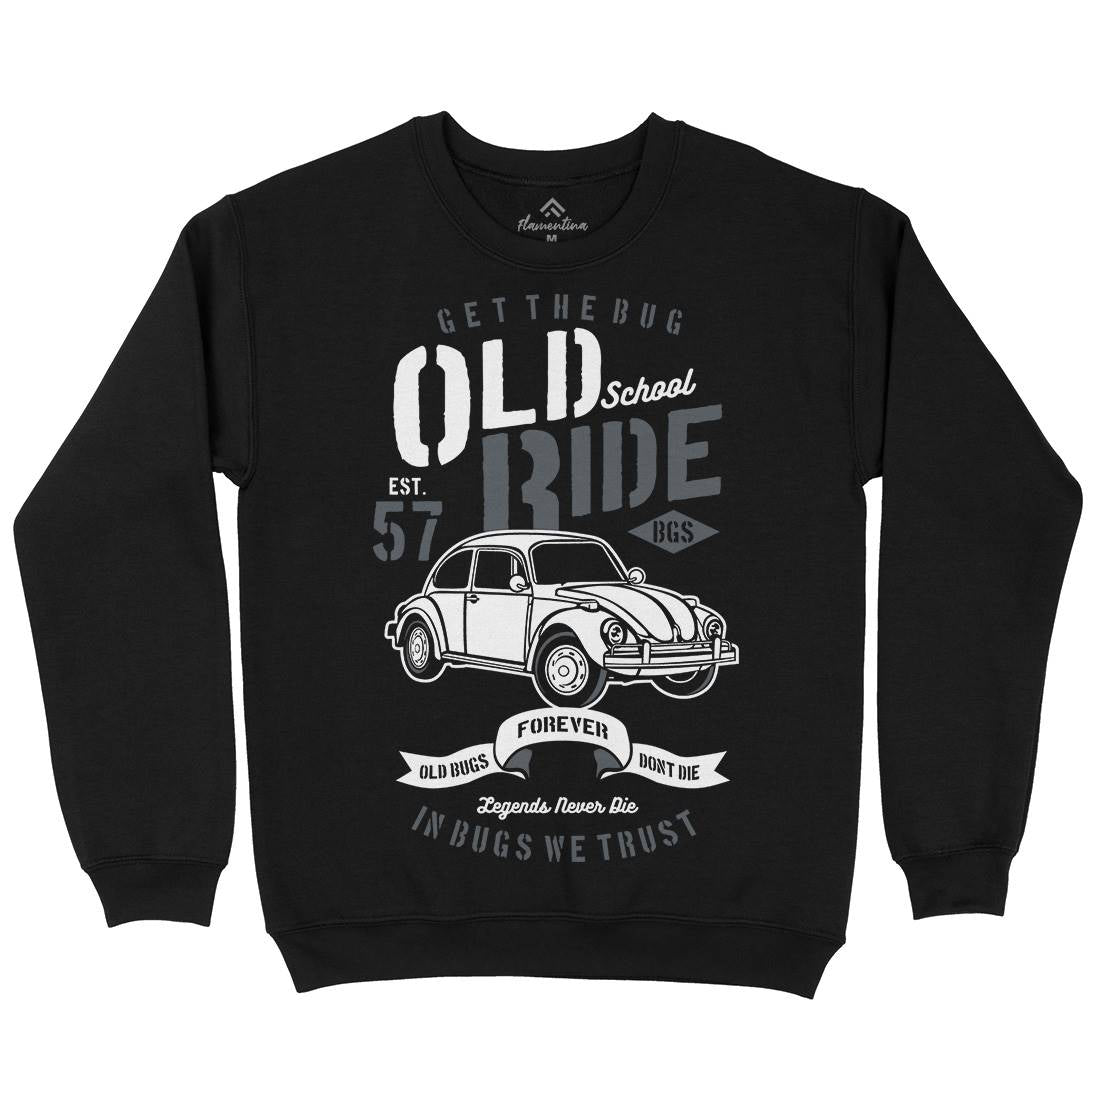 Old School Ride Kids Crew Neck Sweatshirt Cars B239